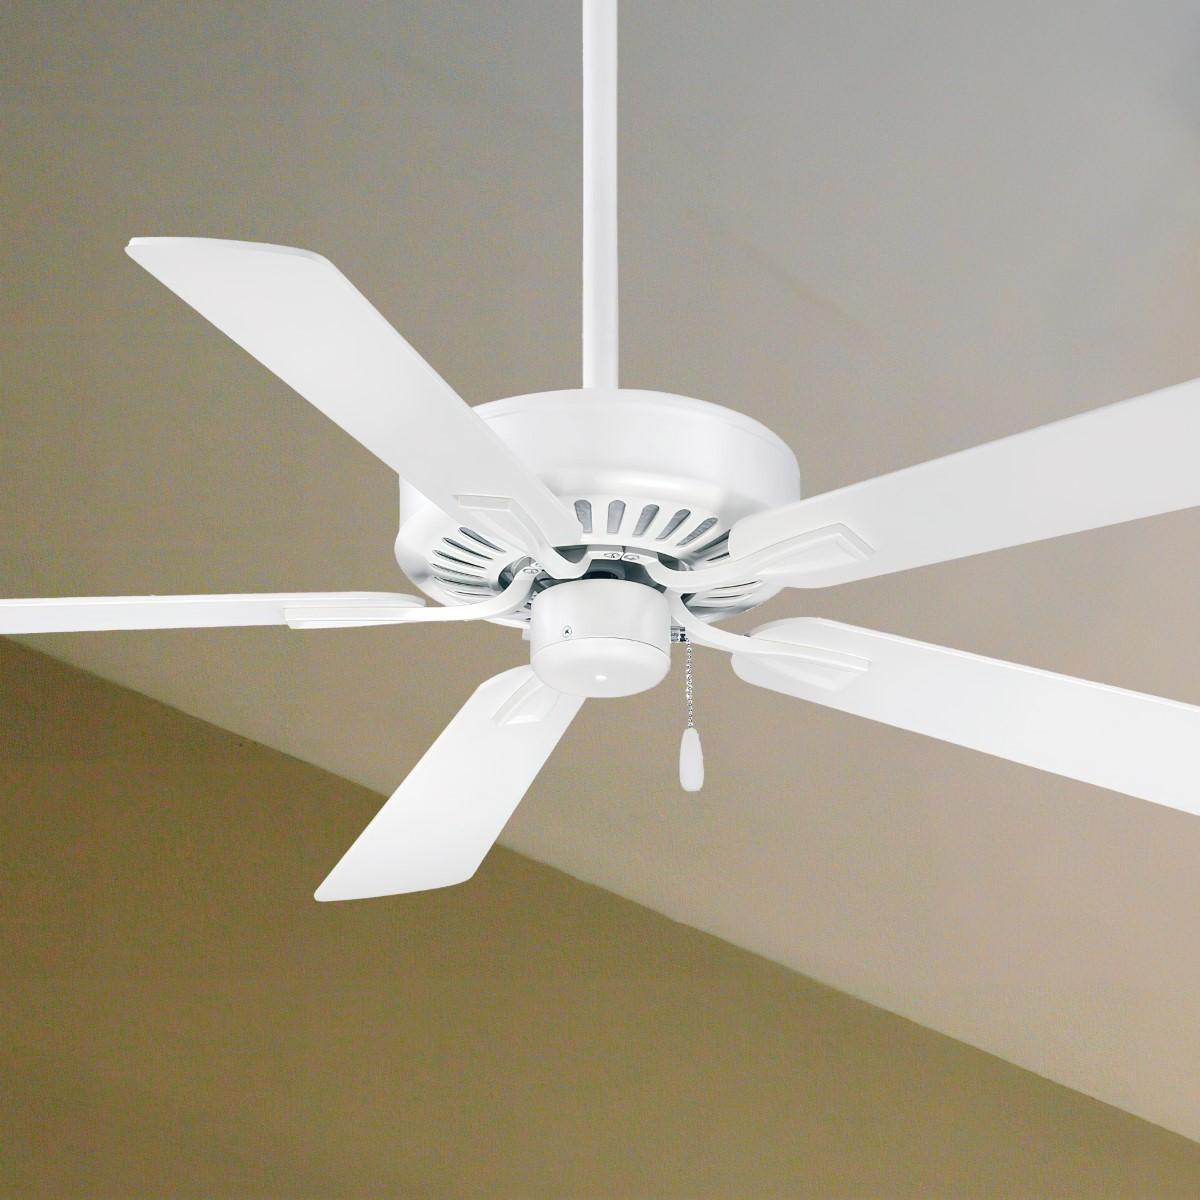 Contractor Plus 52 Inch Ceiling Fan